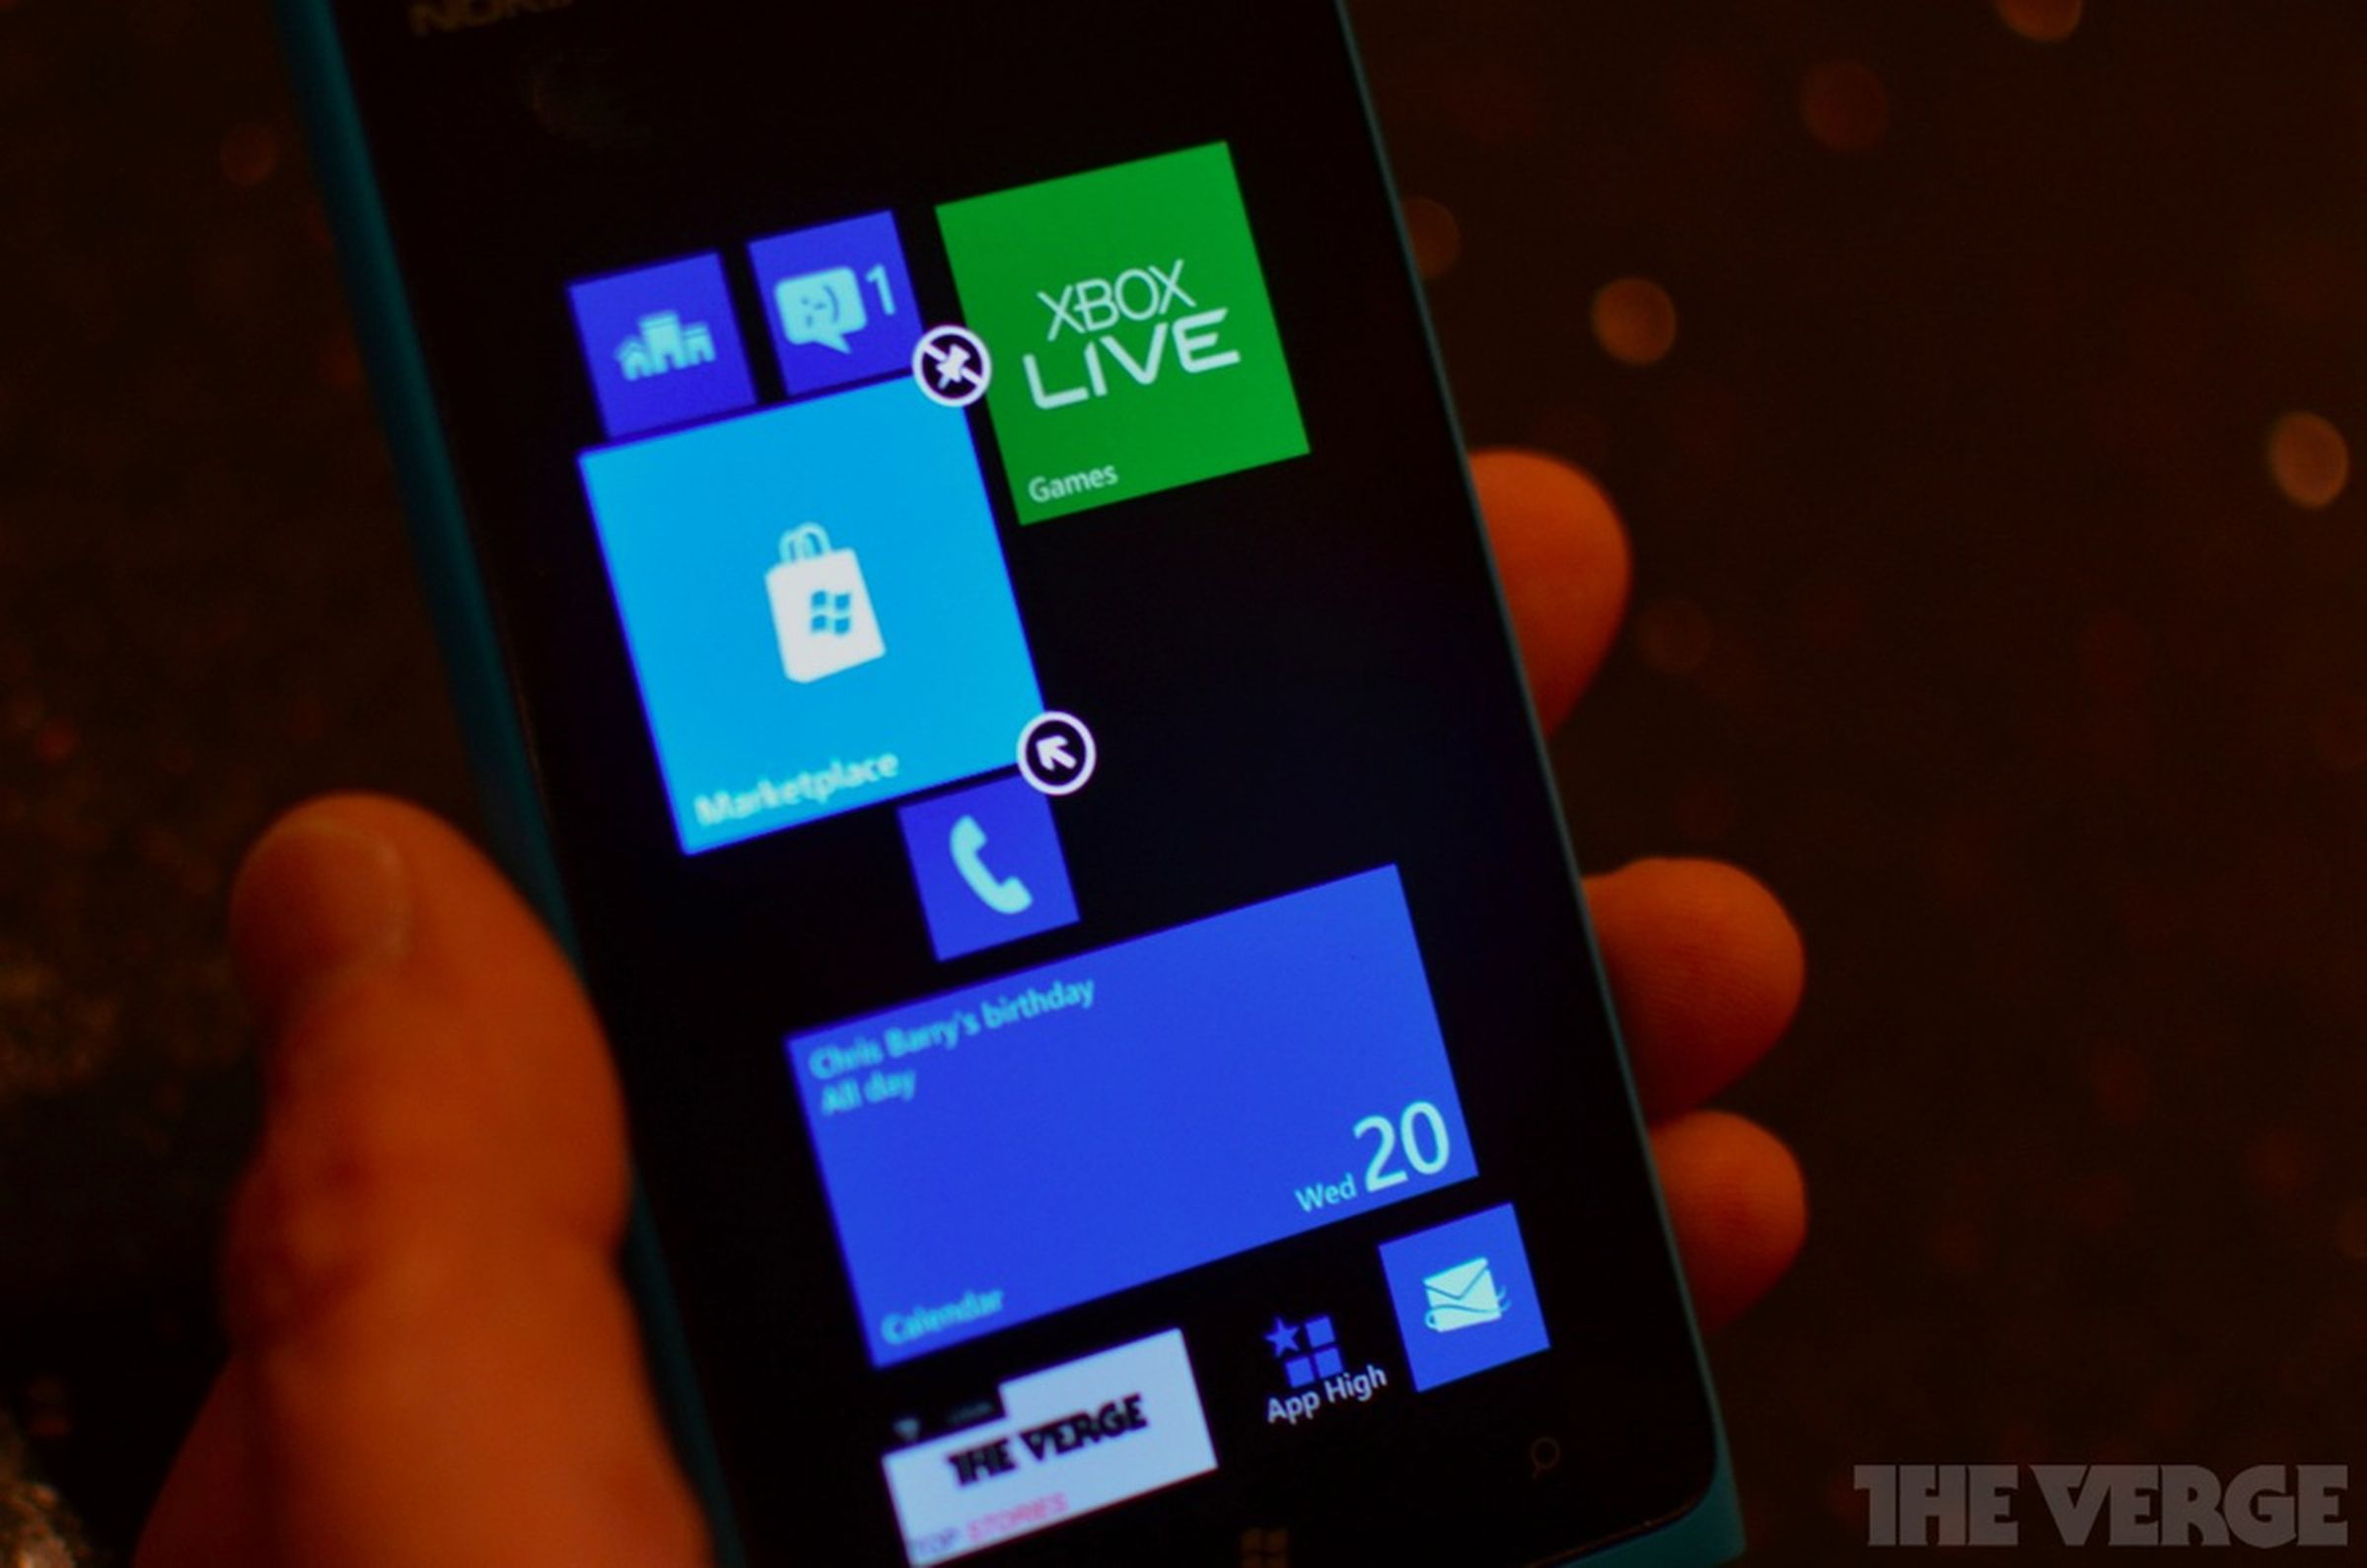 Nokia Lumia 900 with Windows Phone 7.8 Start Screen